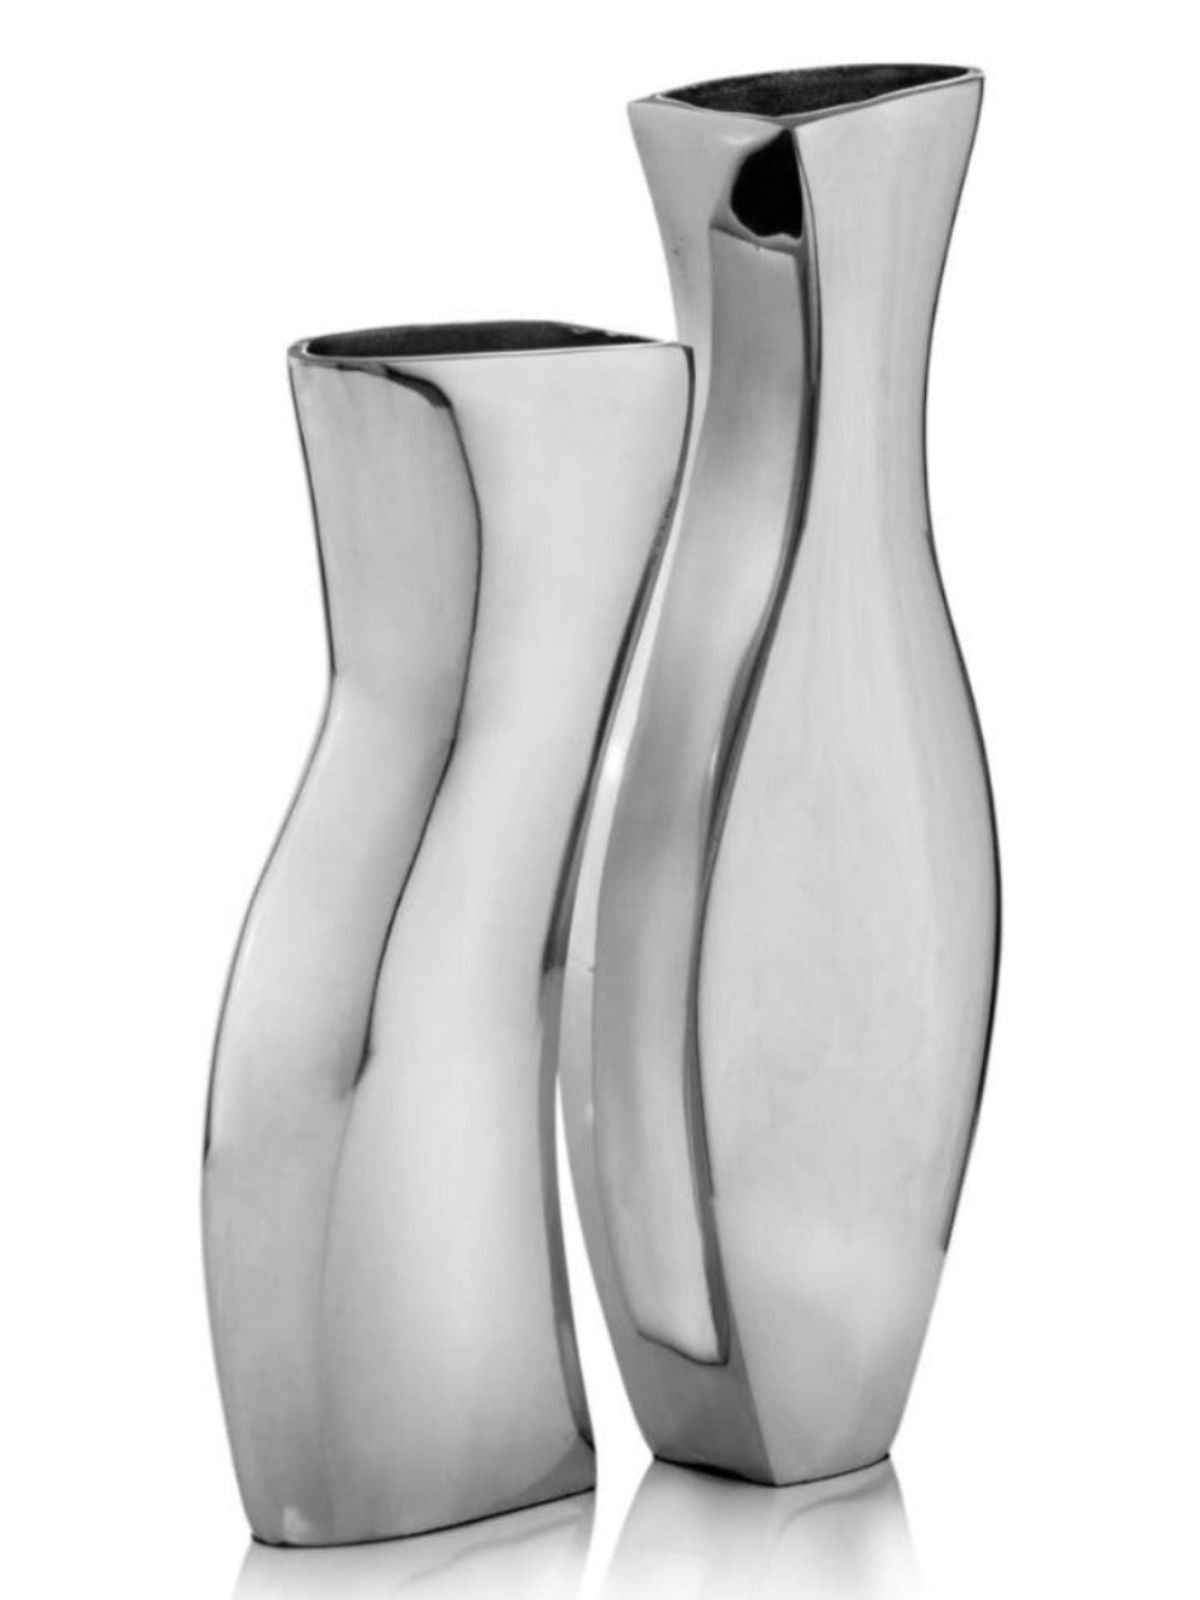 This Set of 2 Shiny Silver Cast Aluminum Decorative Vases boast a unique minimalistic adjoining shape.